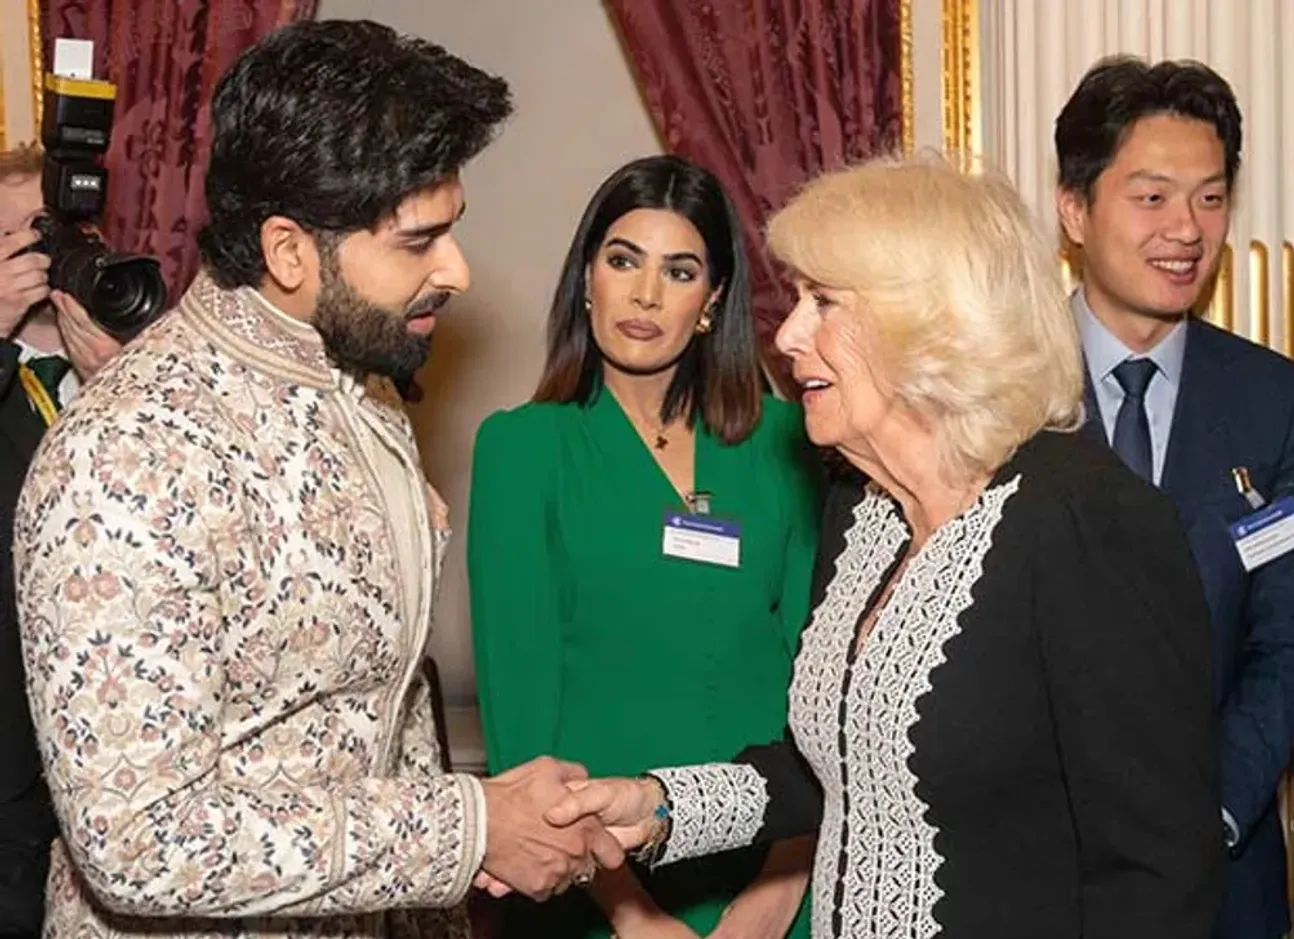 Darasing Khurana met Queen Camilla in London